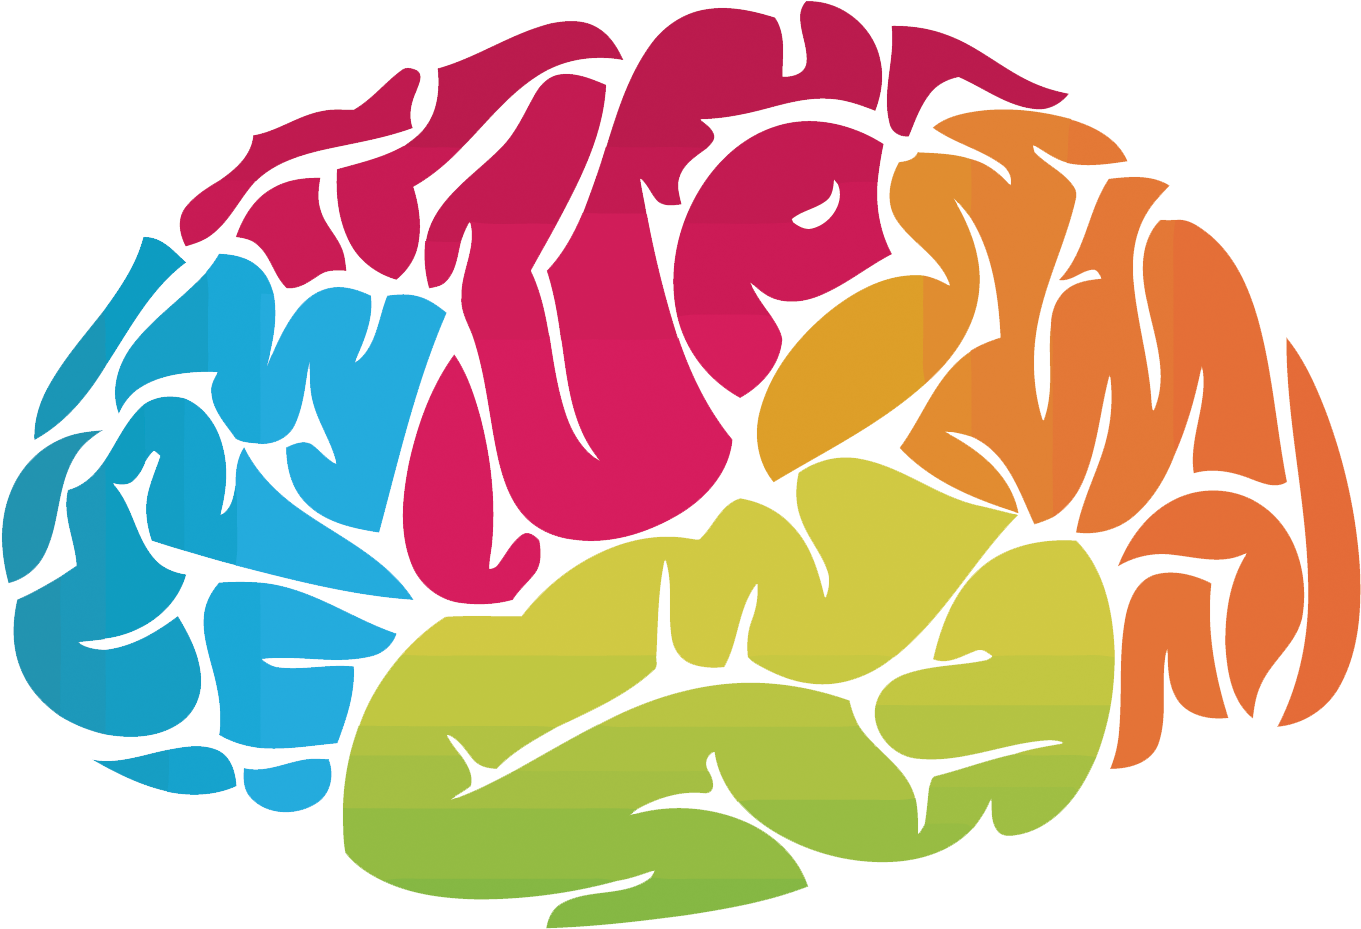 Human Brain Clip Art - 2018 Mental Health Awareness Month.